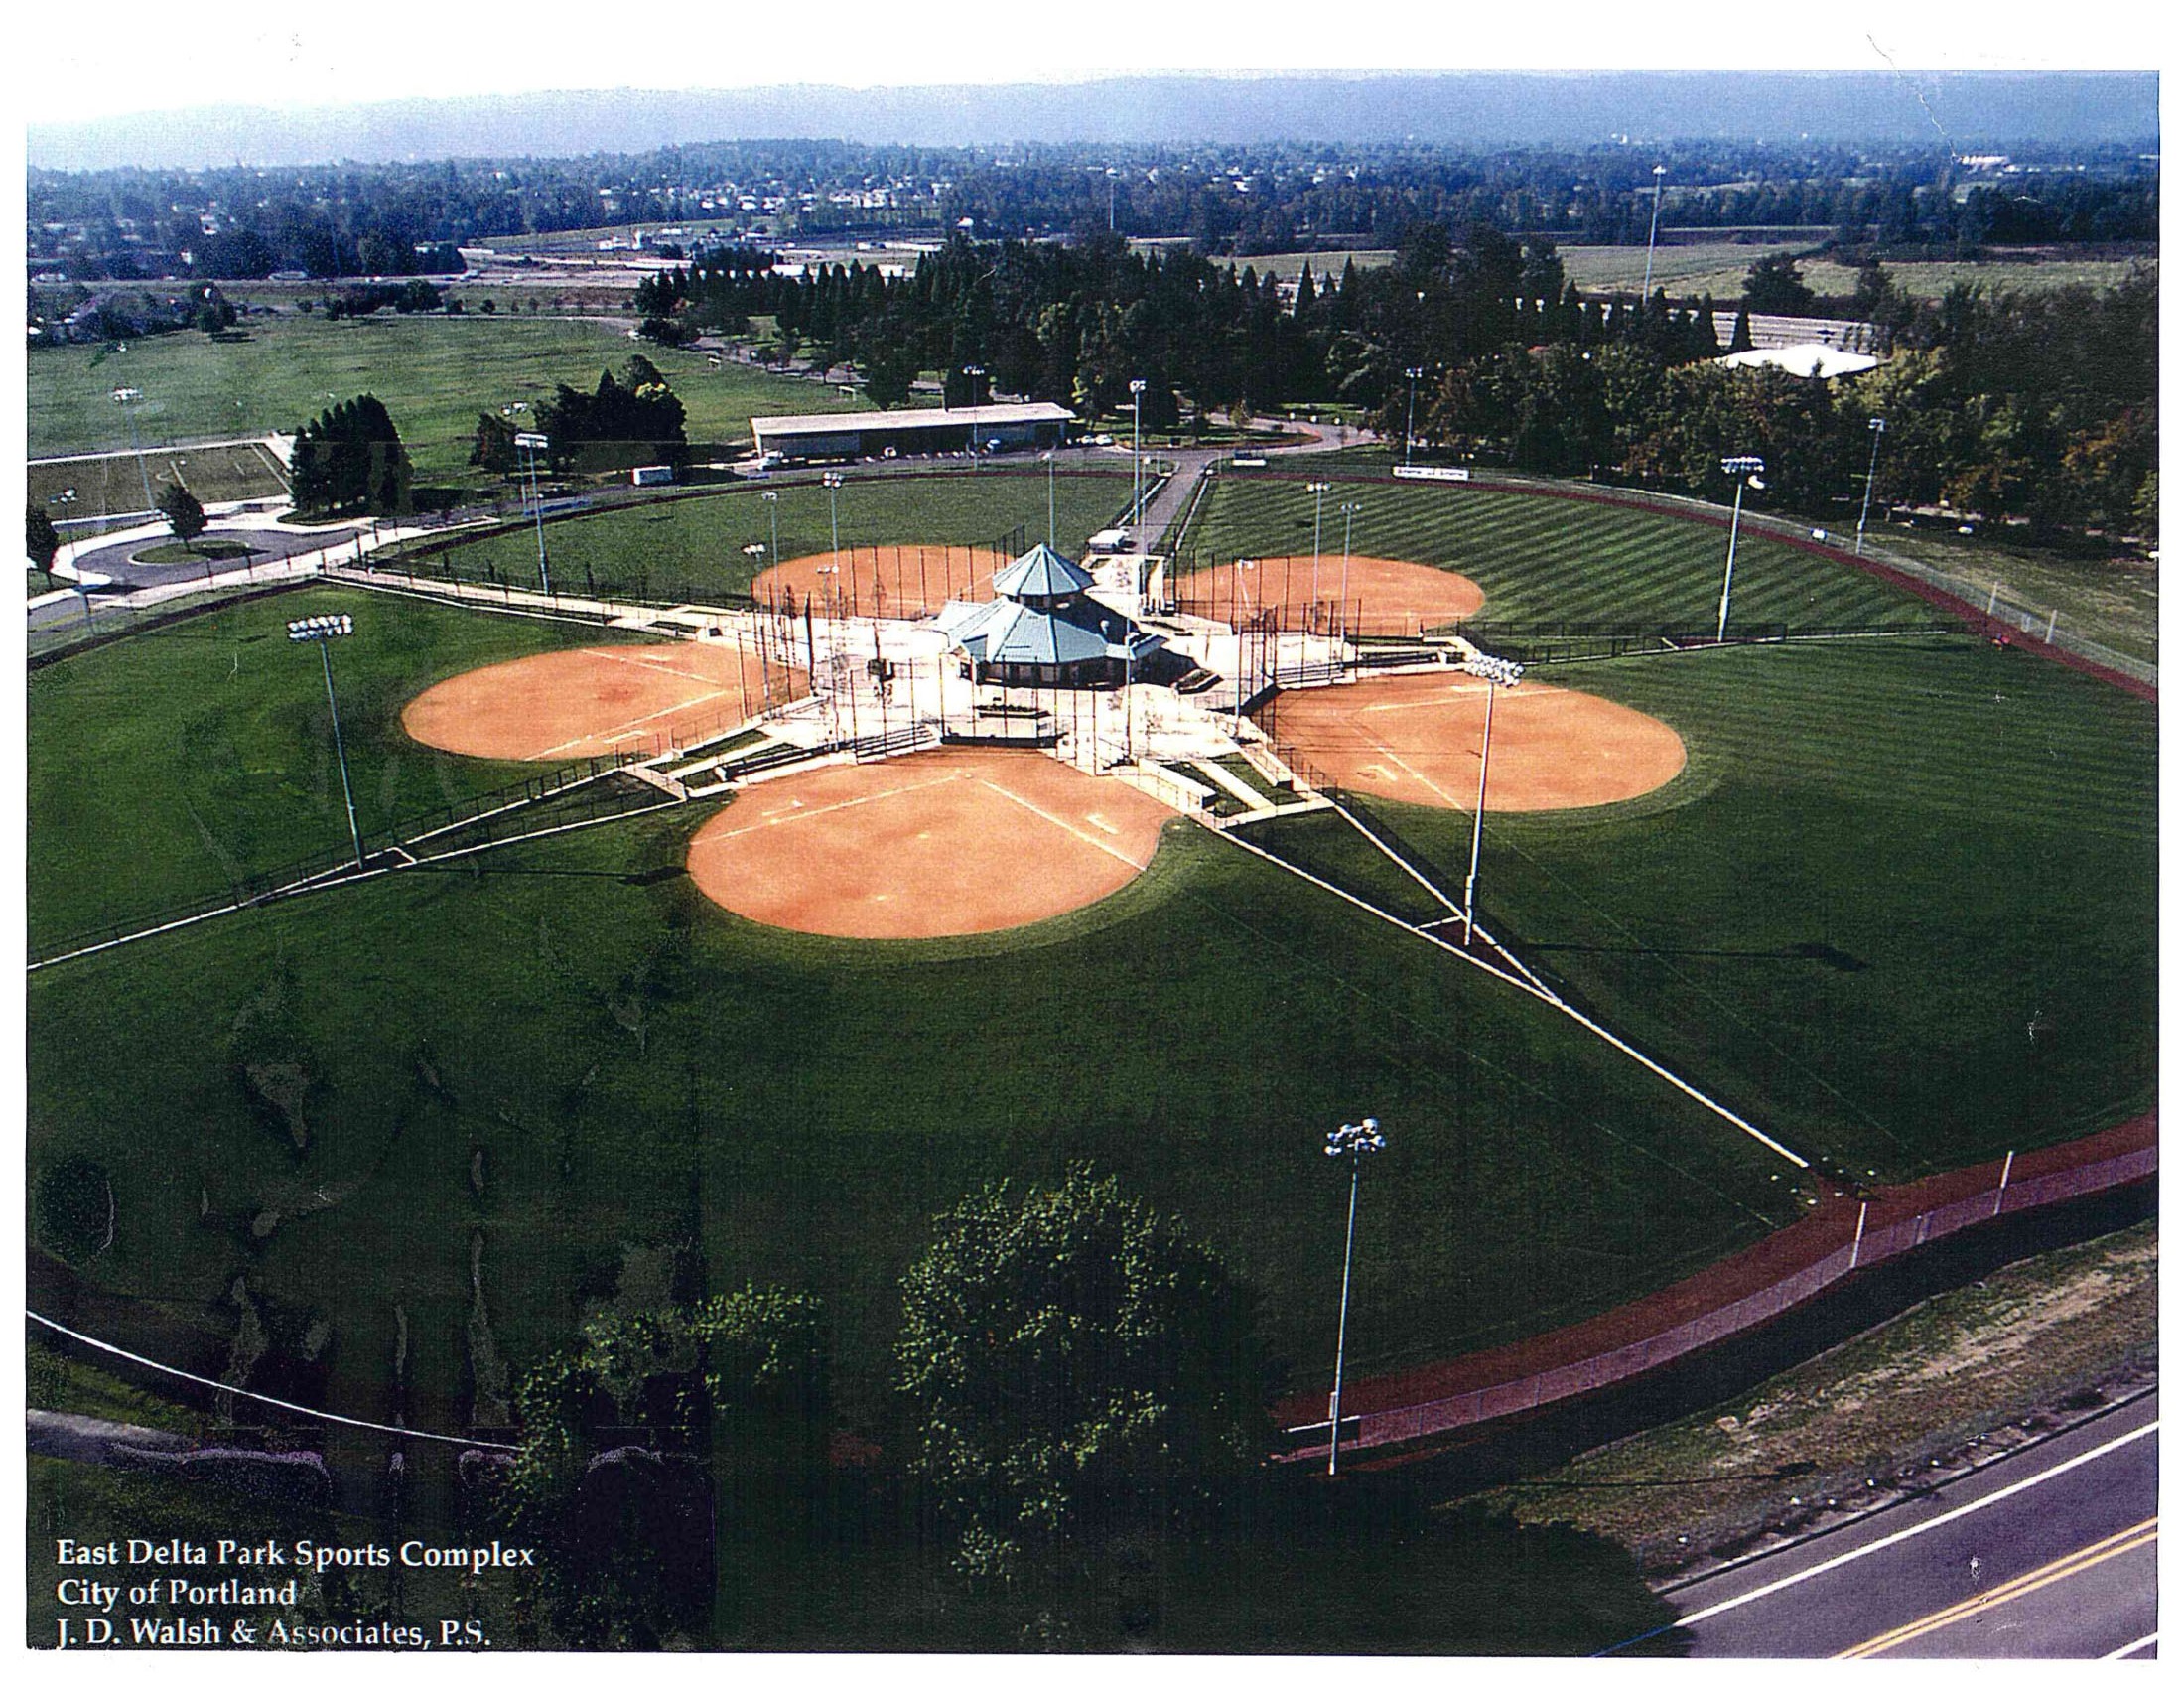 East Delta Park Softball Complex